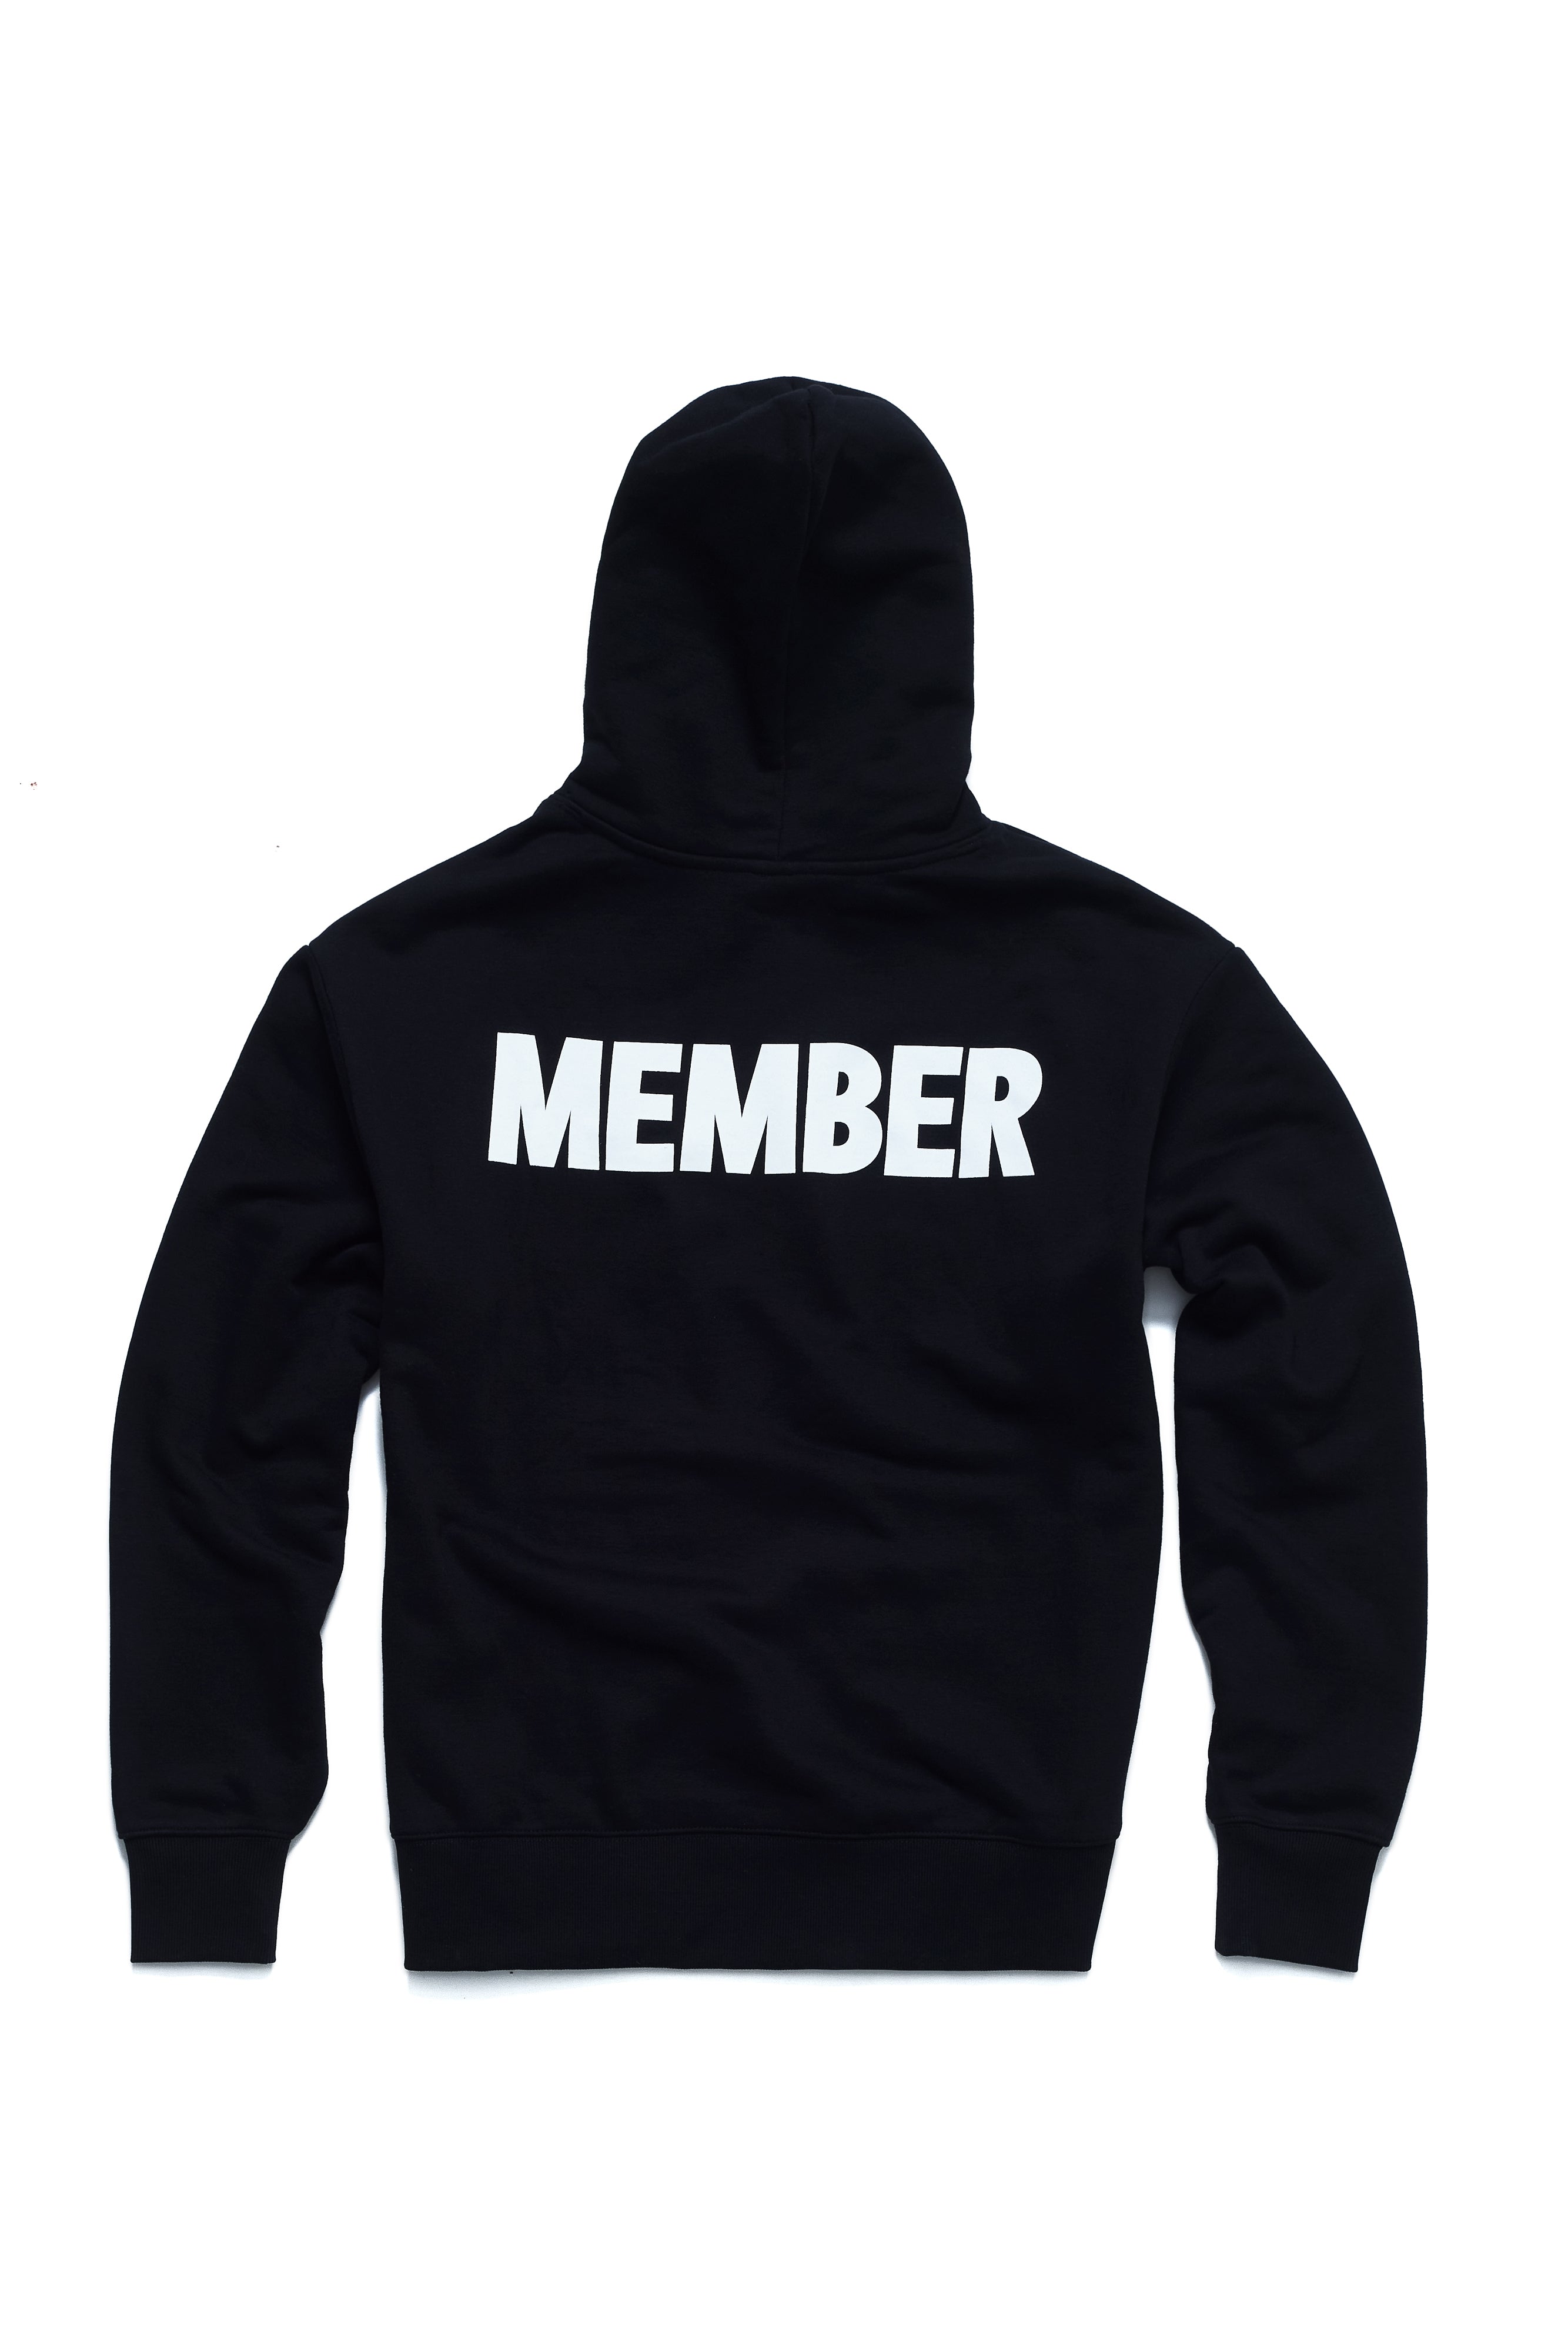 BHGC Members Premium Hoodie - Black